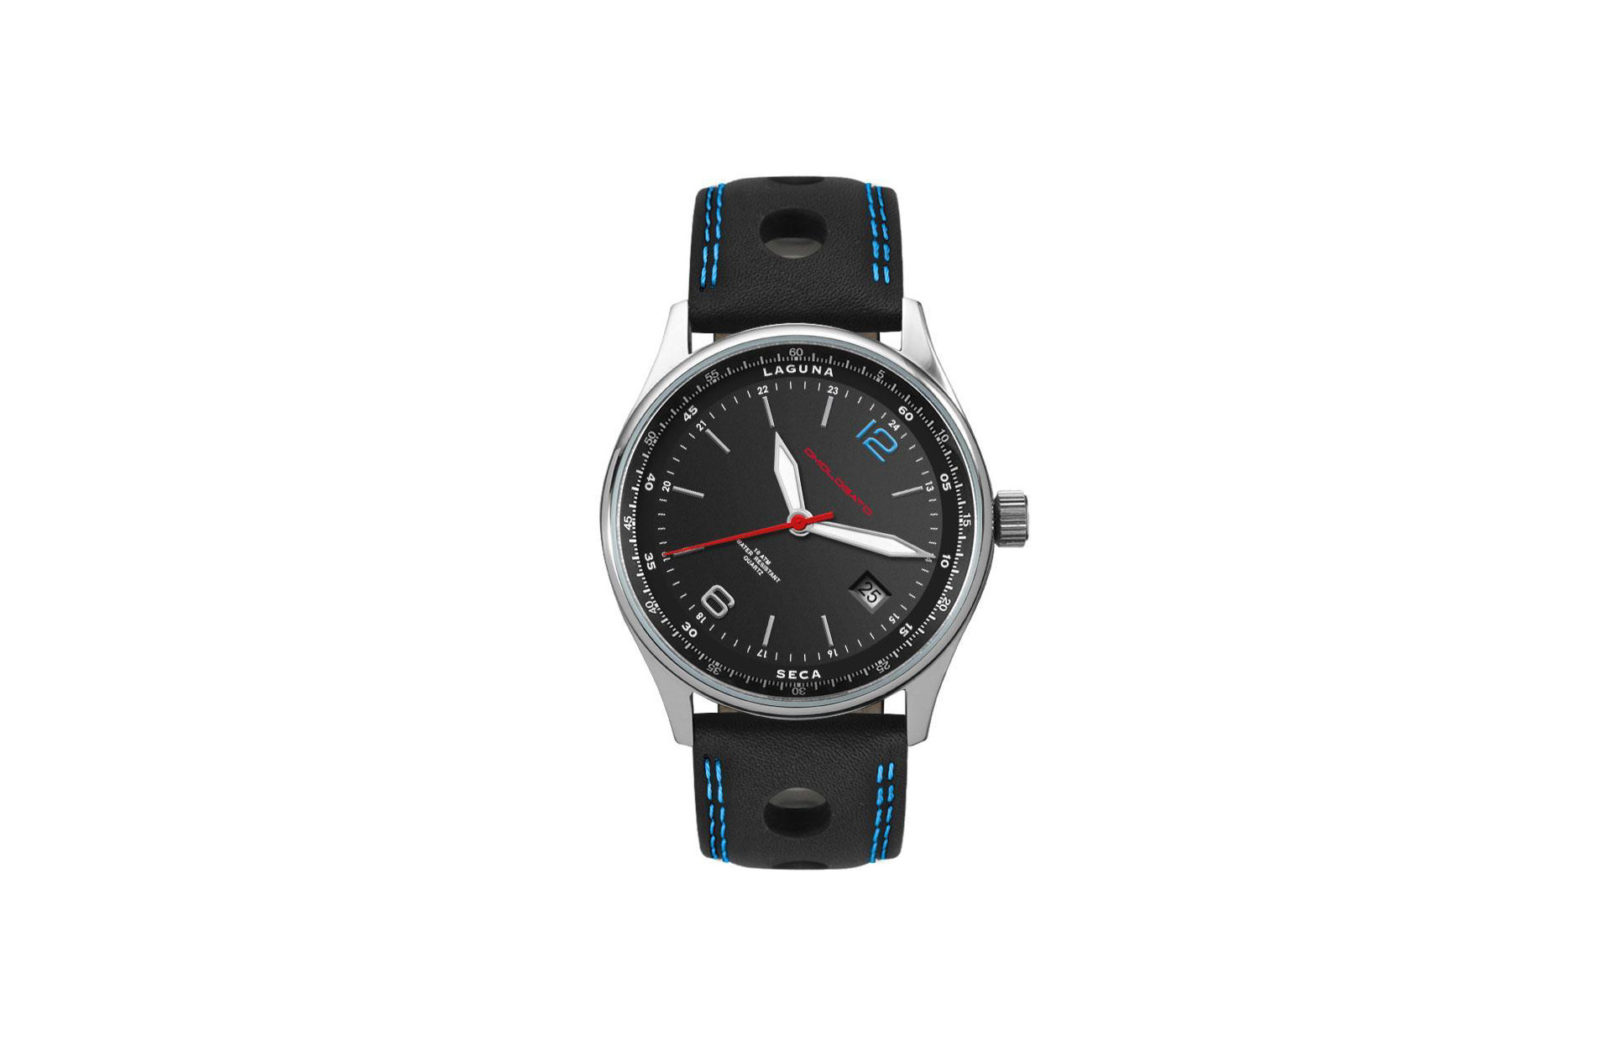 Omologato Laguna Seca- автомобільний наручний годинник